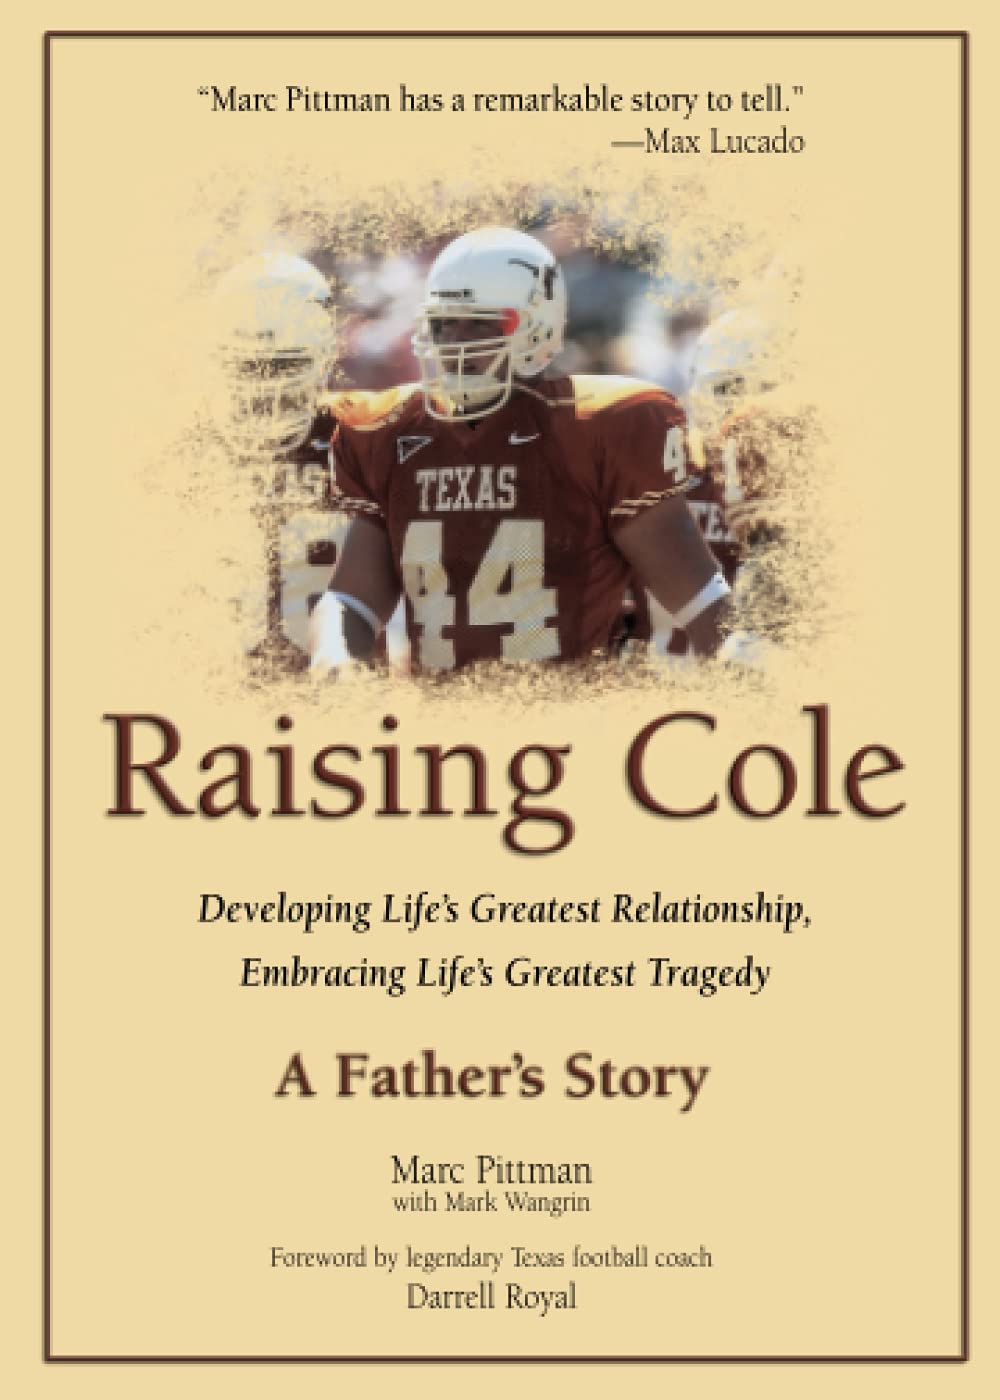 "Raising Cole" by Marc Pittman with Mark Wangrin